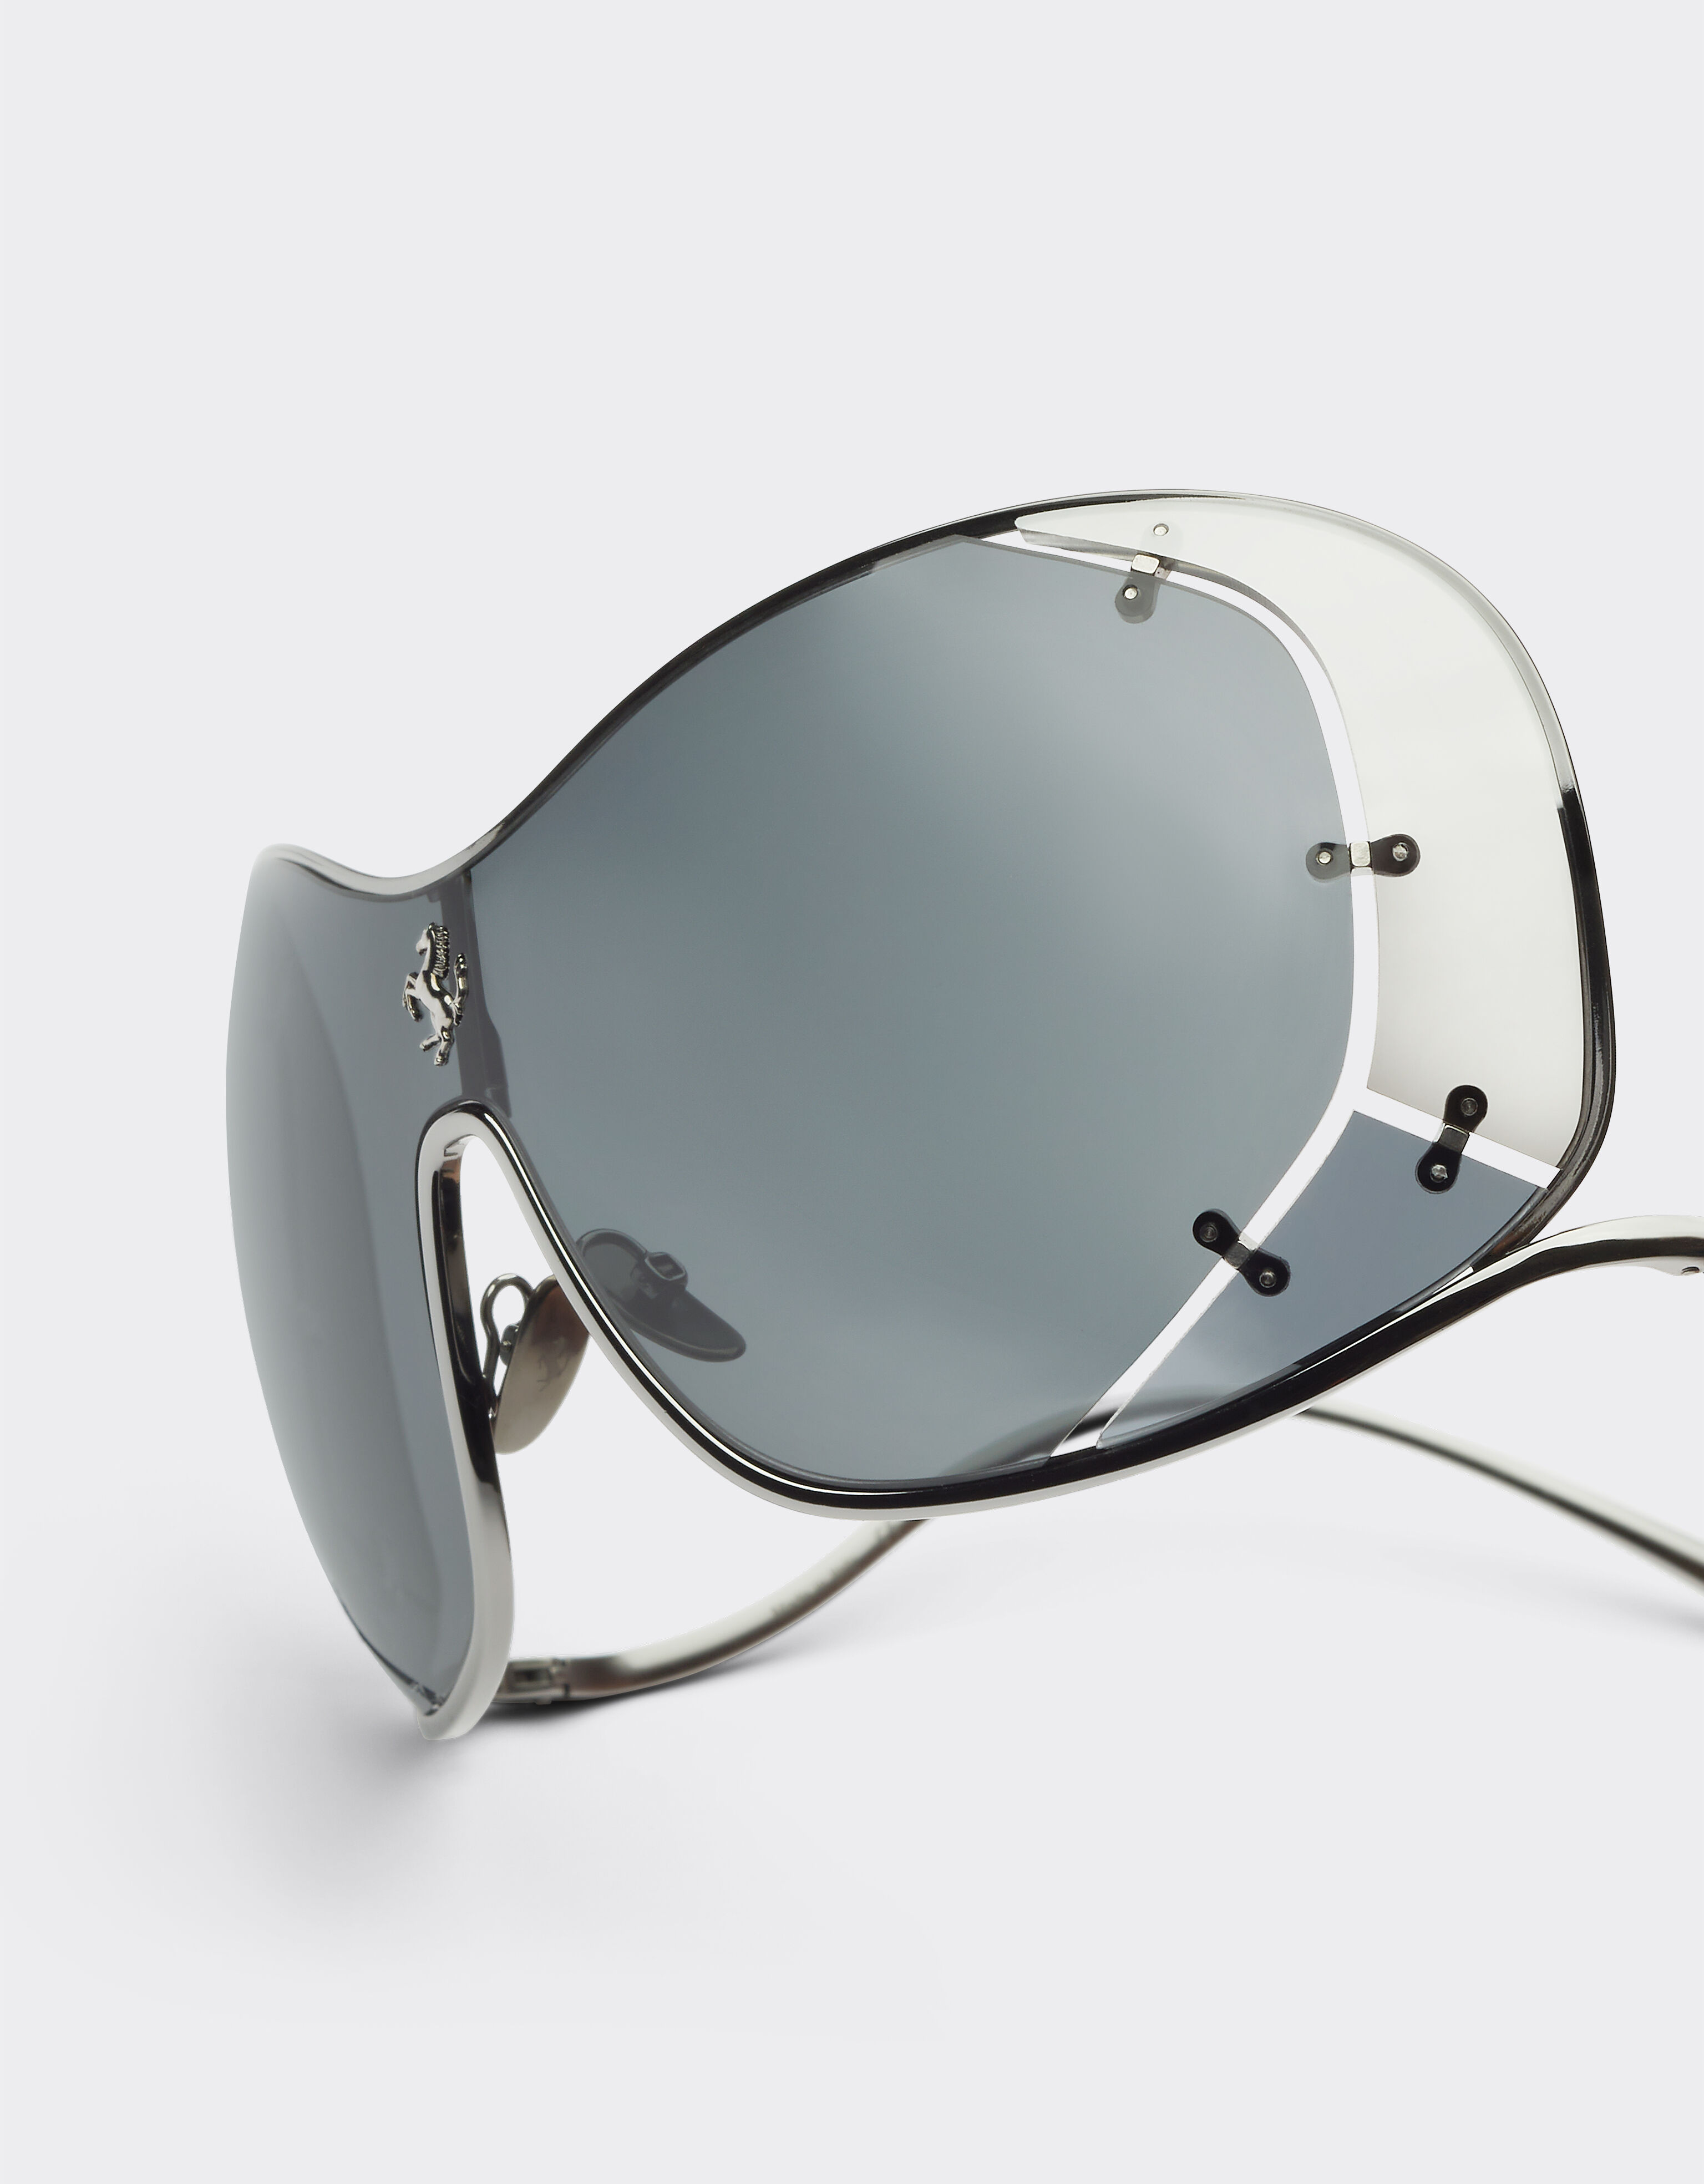 Ferrari Ferrari sunglasses with grey lenses Dark Grey F0640f